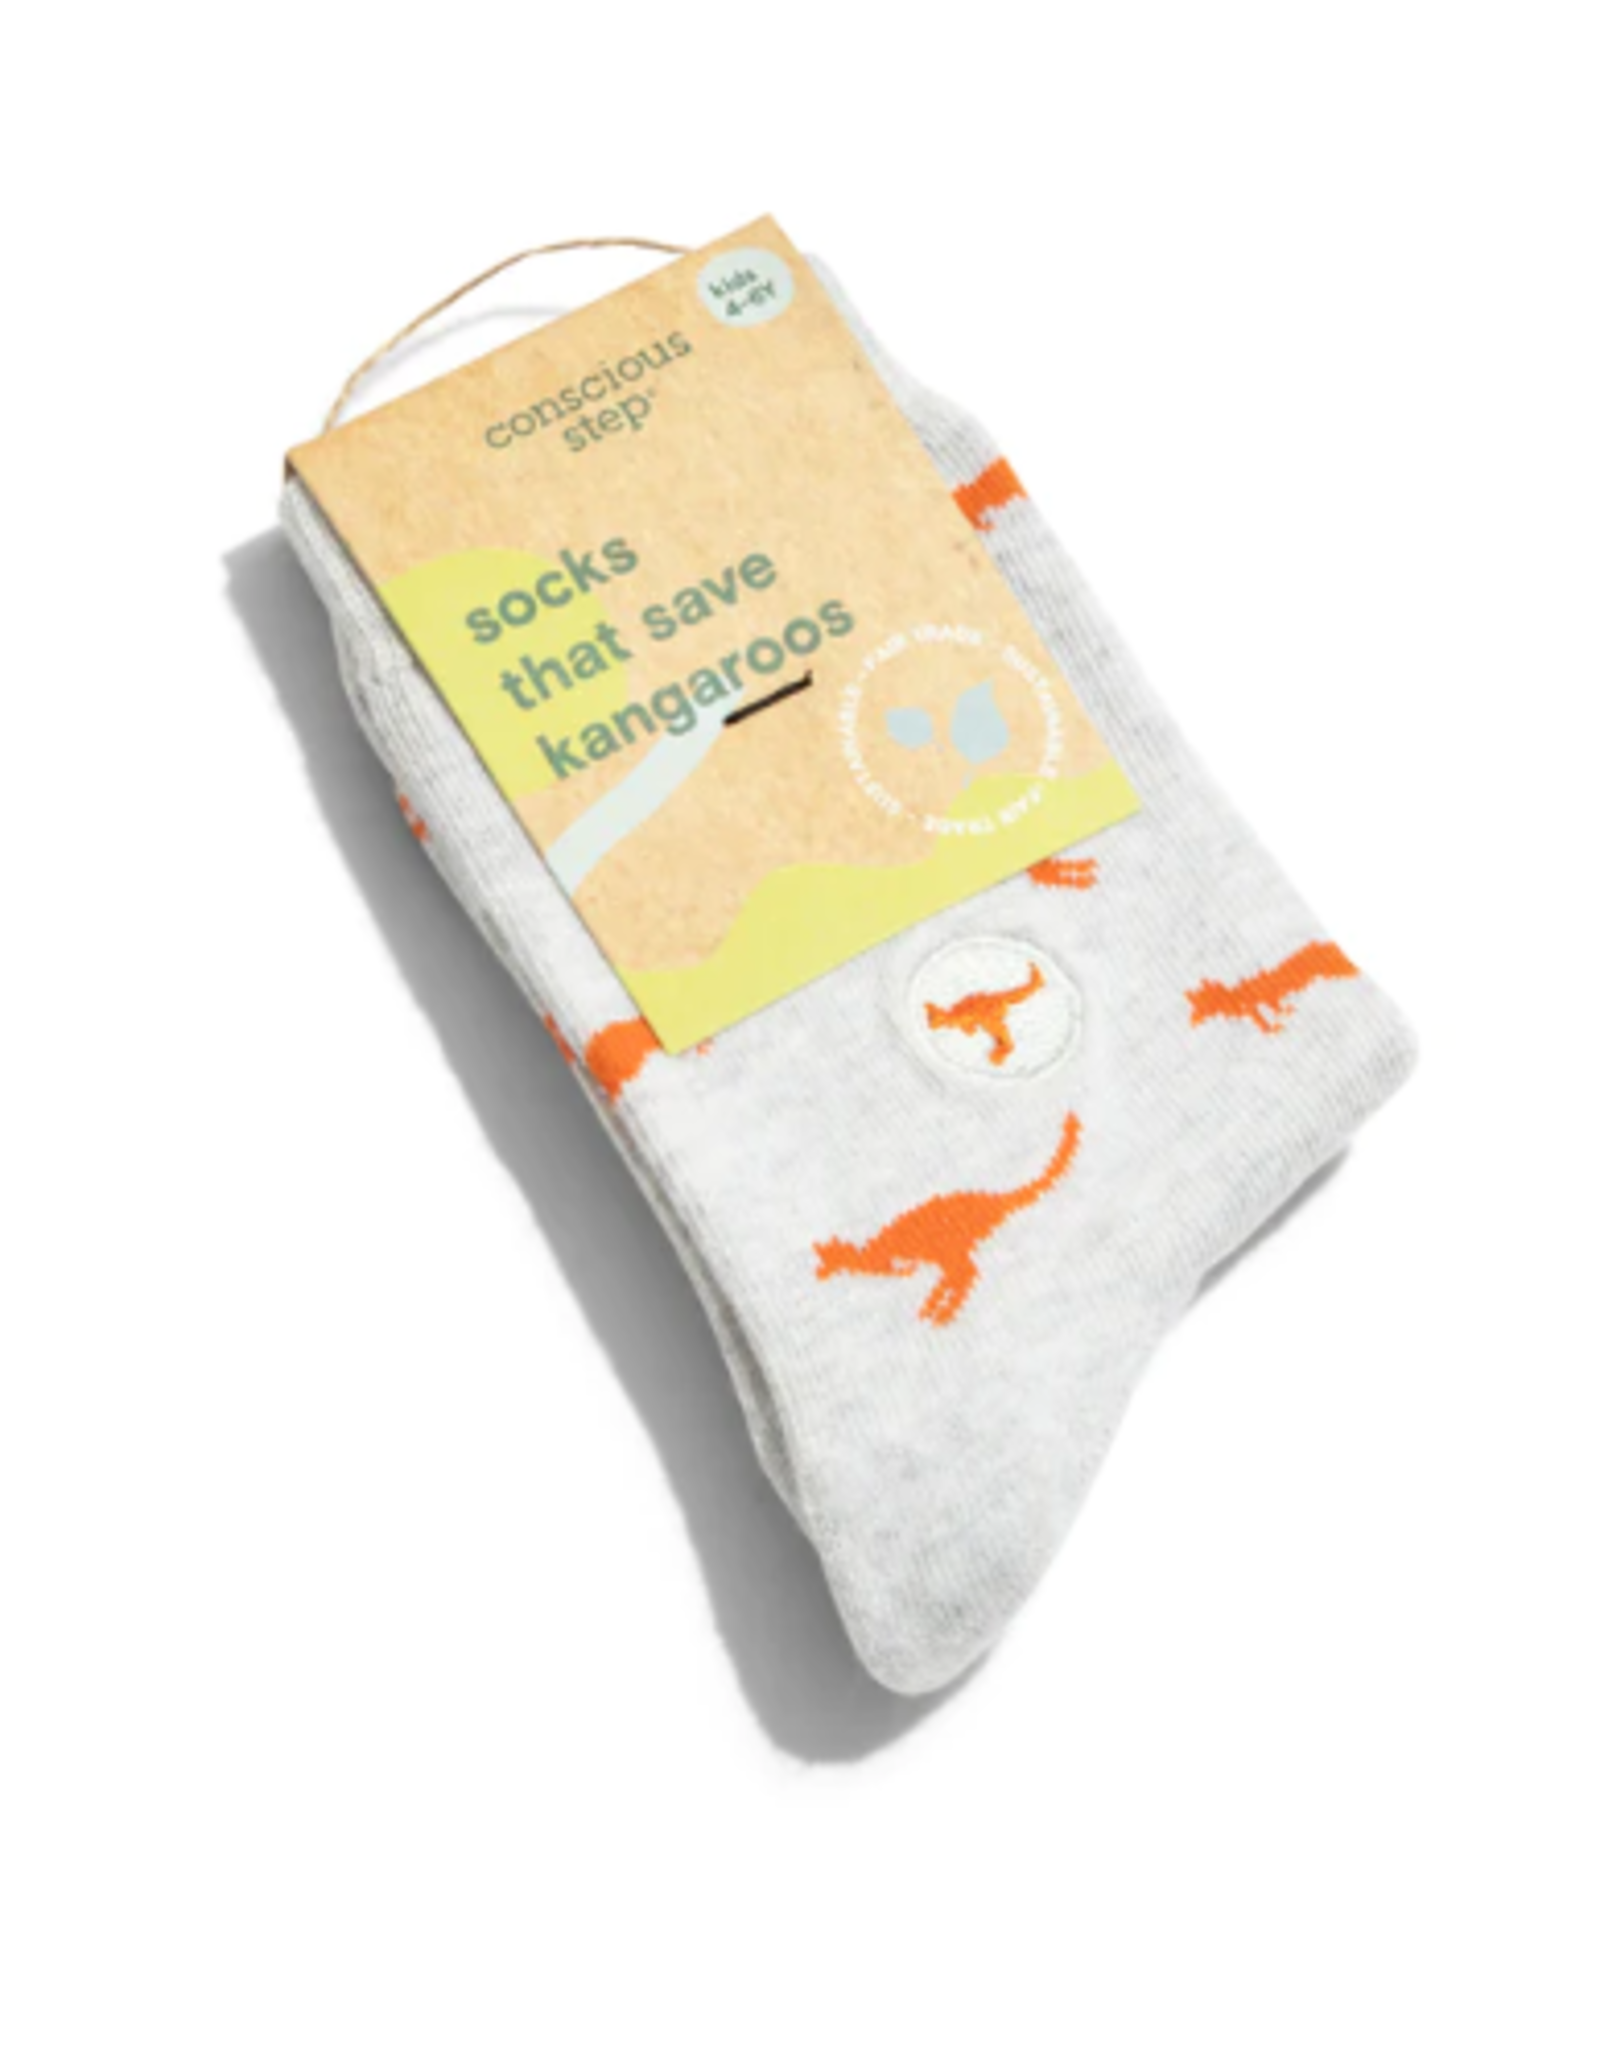 India Kids Socks that Save Kangaroos Preschool